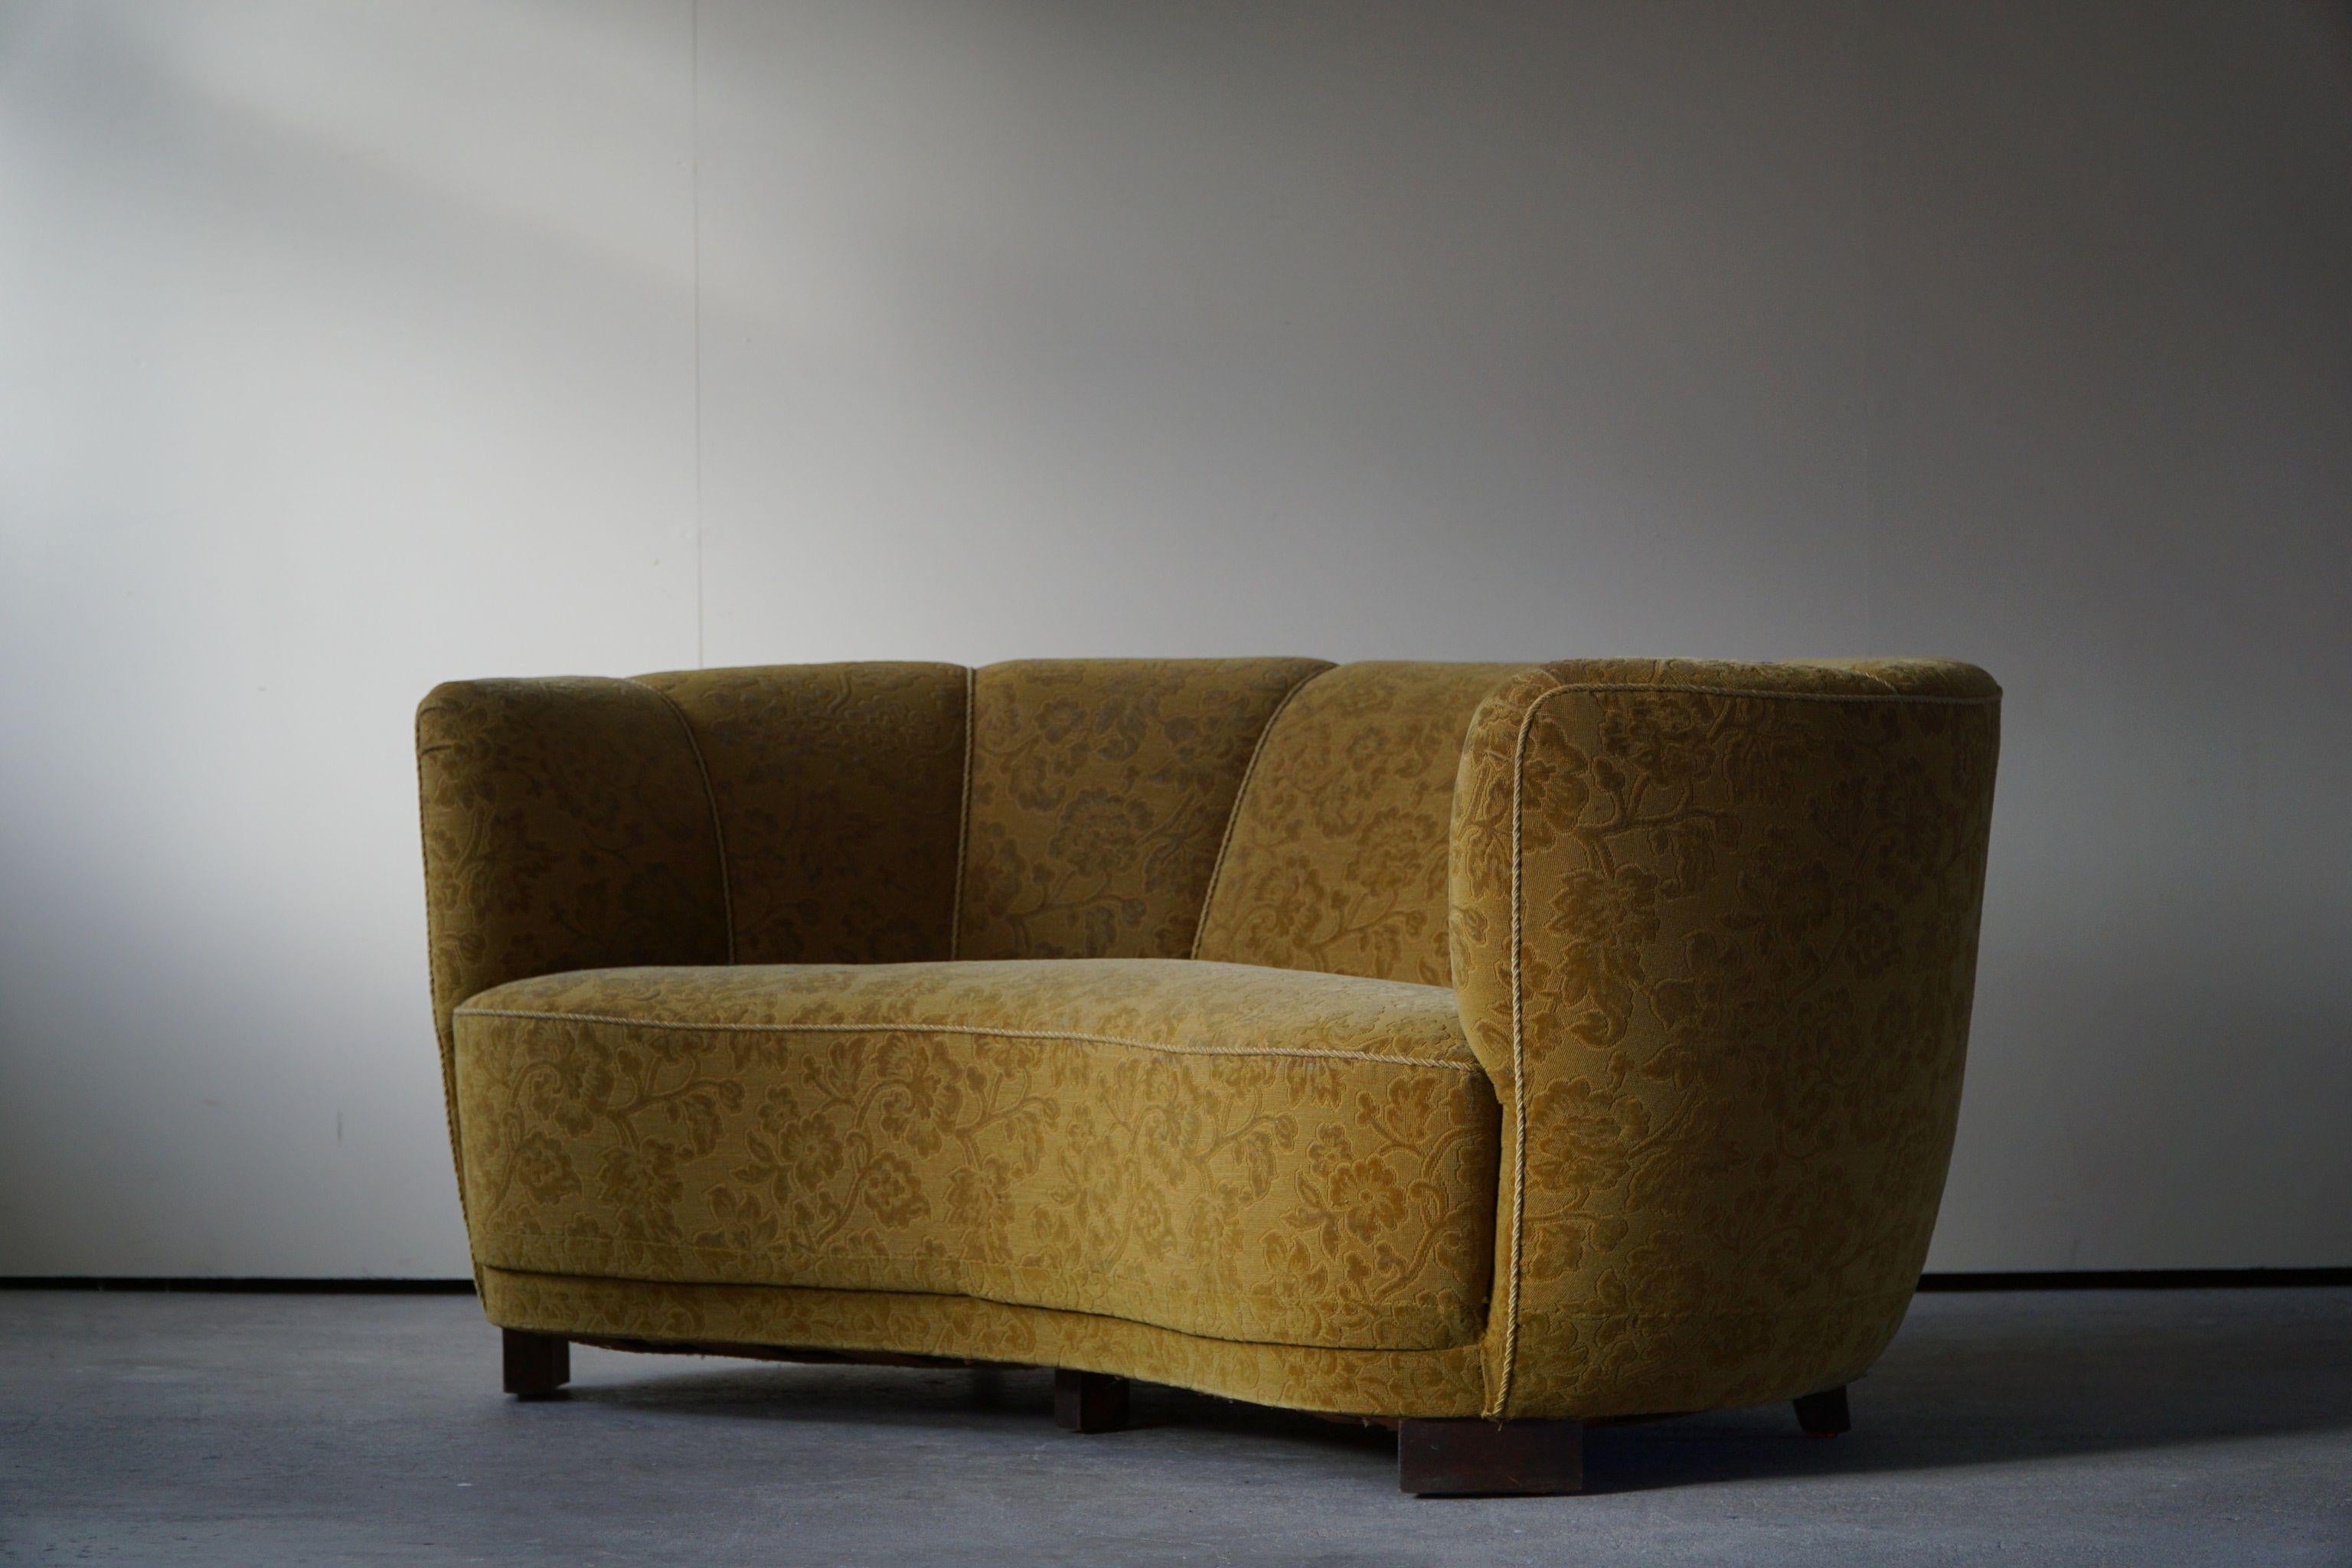 20th Century Mid-Century Modern, Three Seater Banana Sofa, by a Danish Cabinetmaker, 1940s